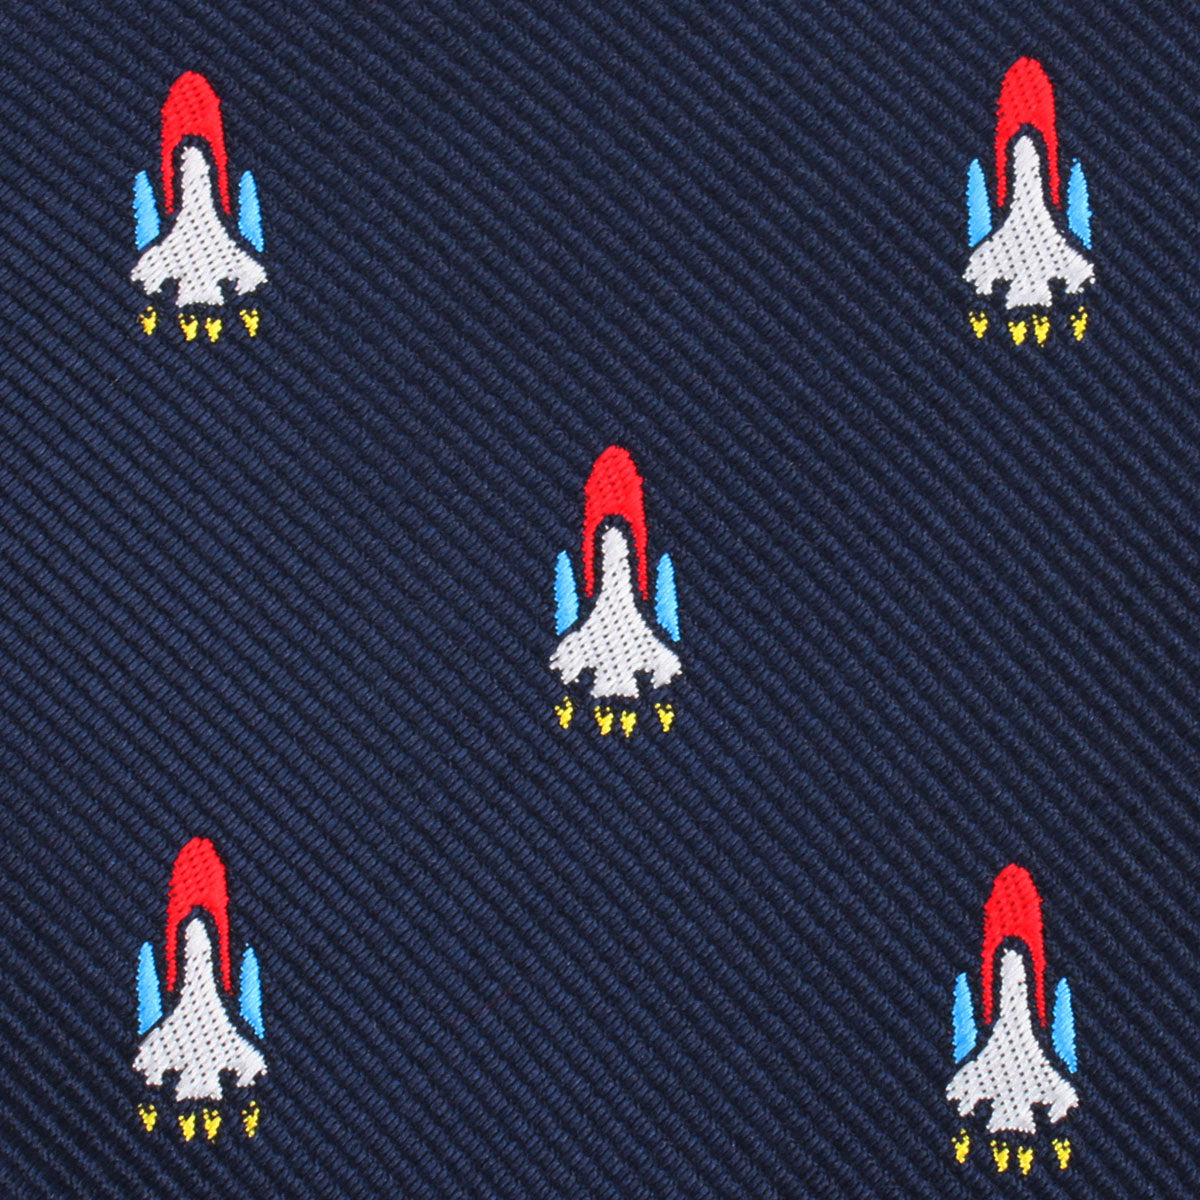 Space Shuttle Skinny Tie Fabric